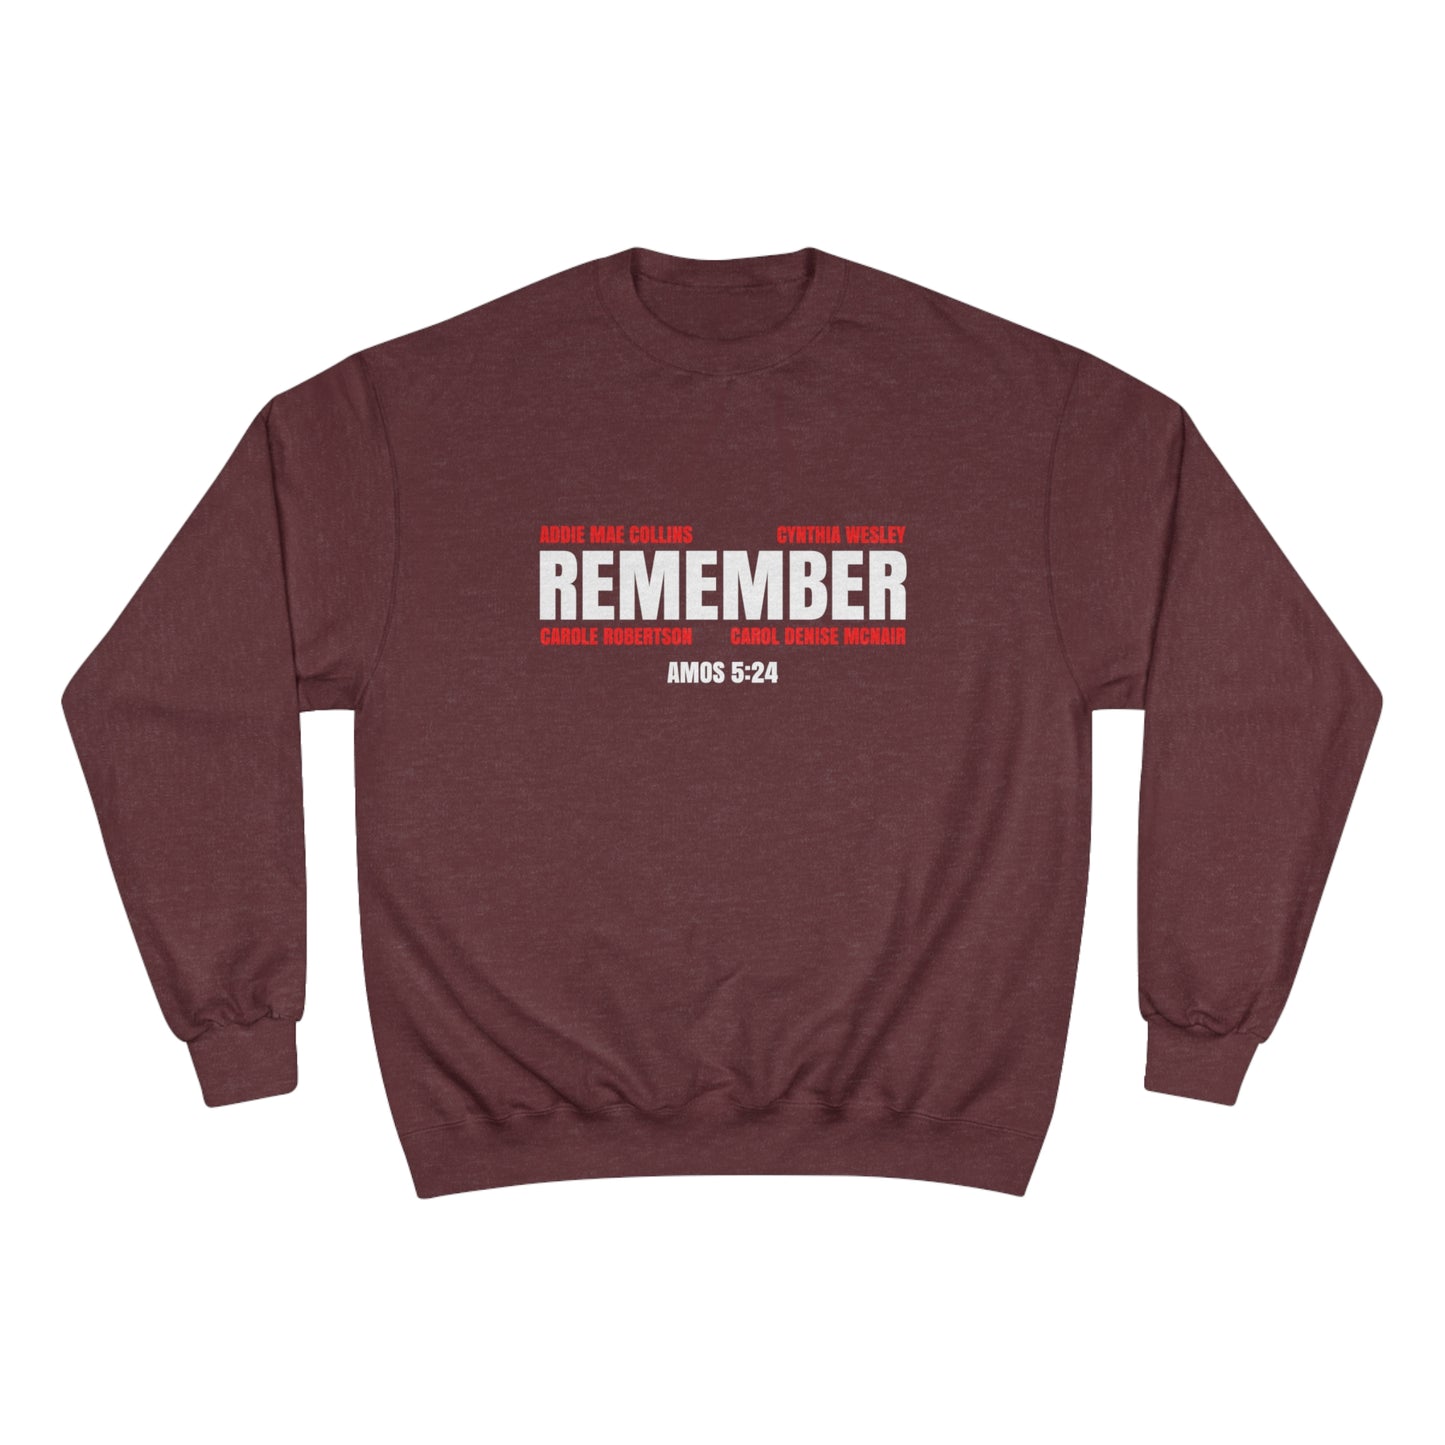 The Remember Series-16th Street Baptist Church Bombing Champion Sweatshirt